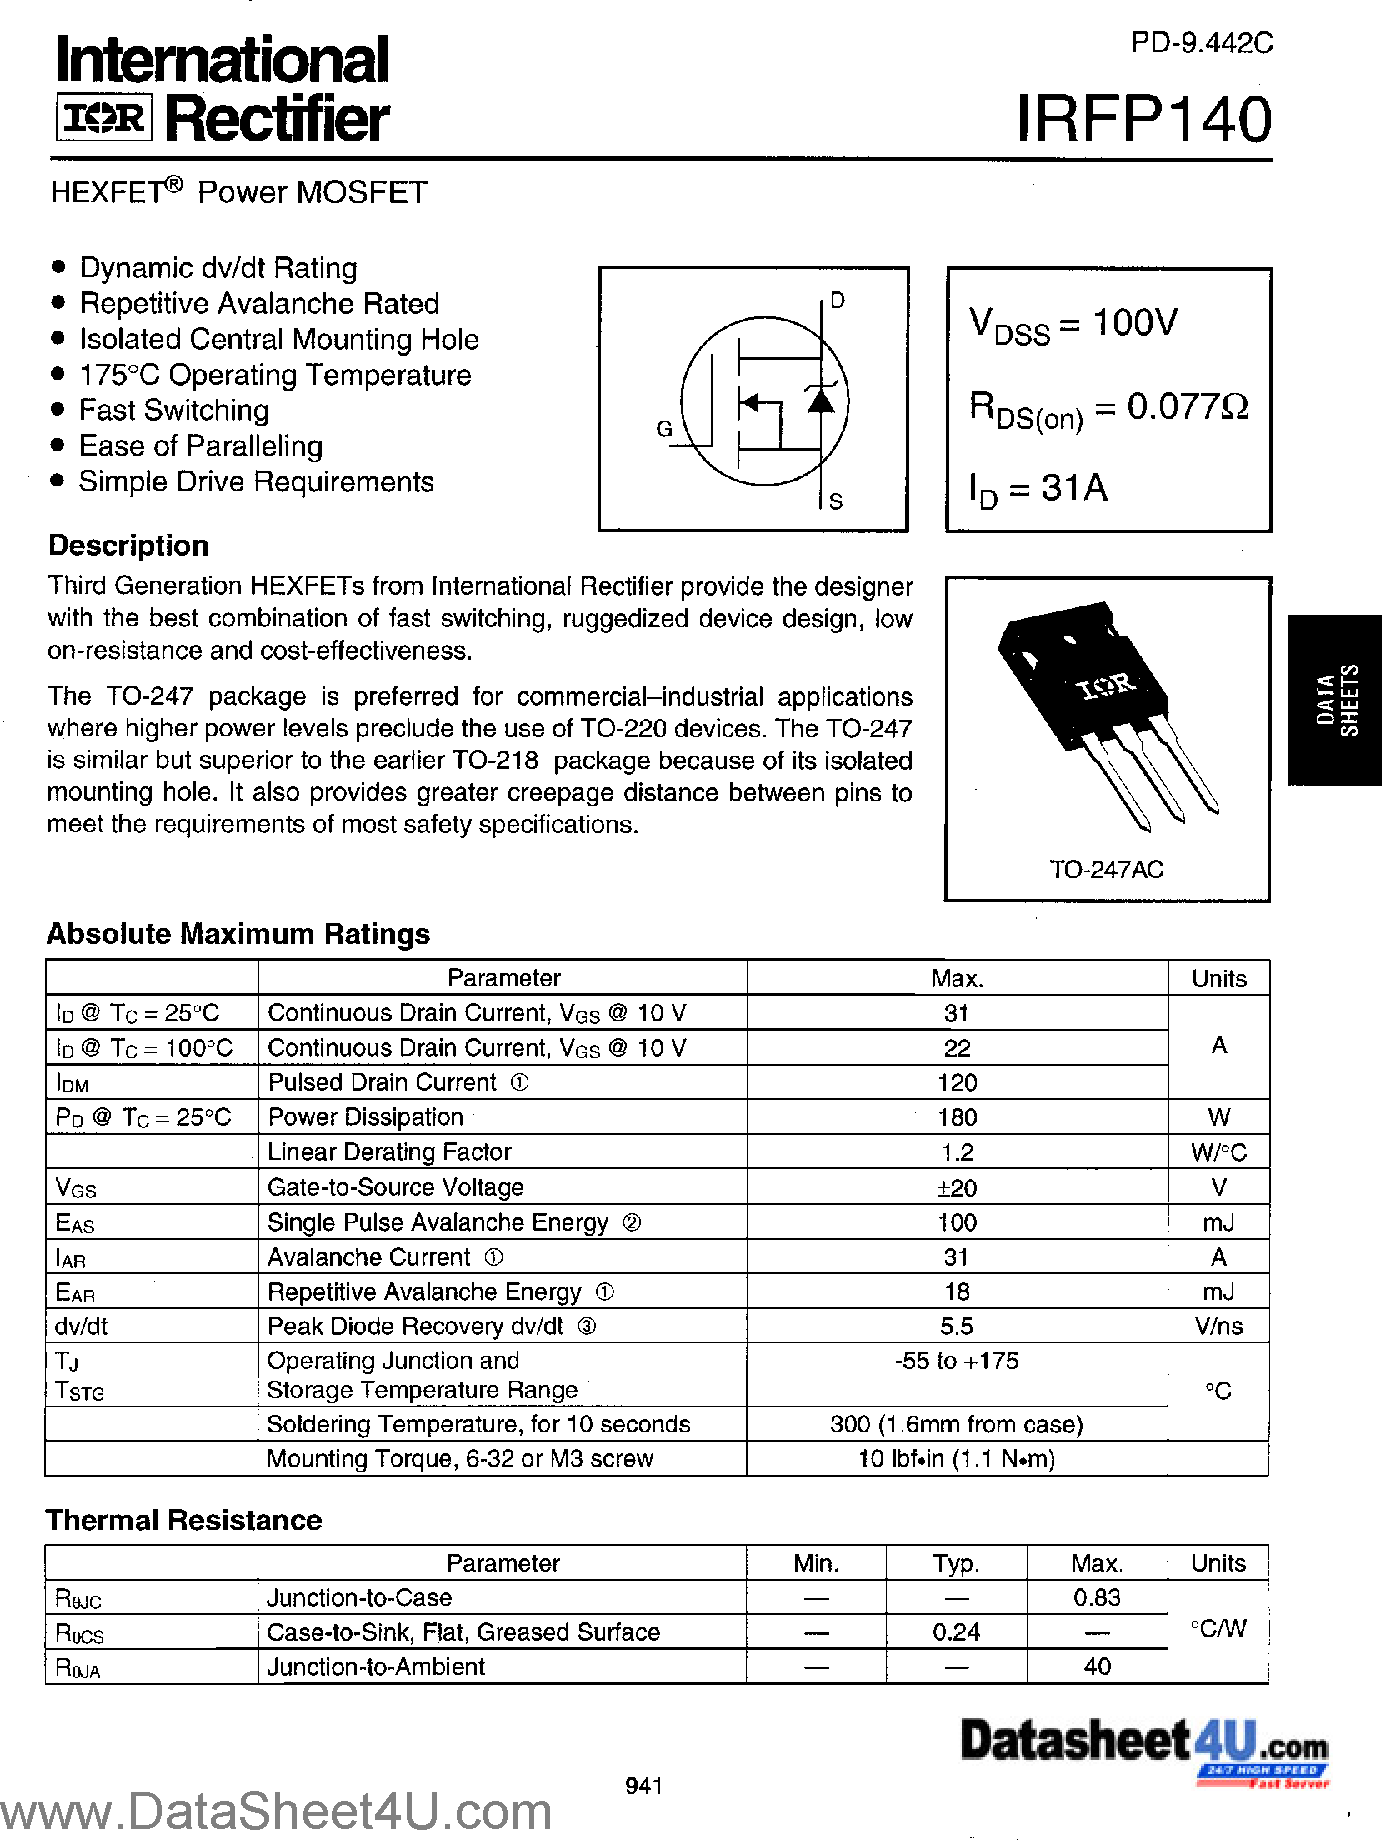 Datasheet IRFP140 - Power MOSFET page 1